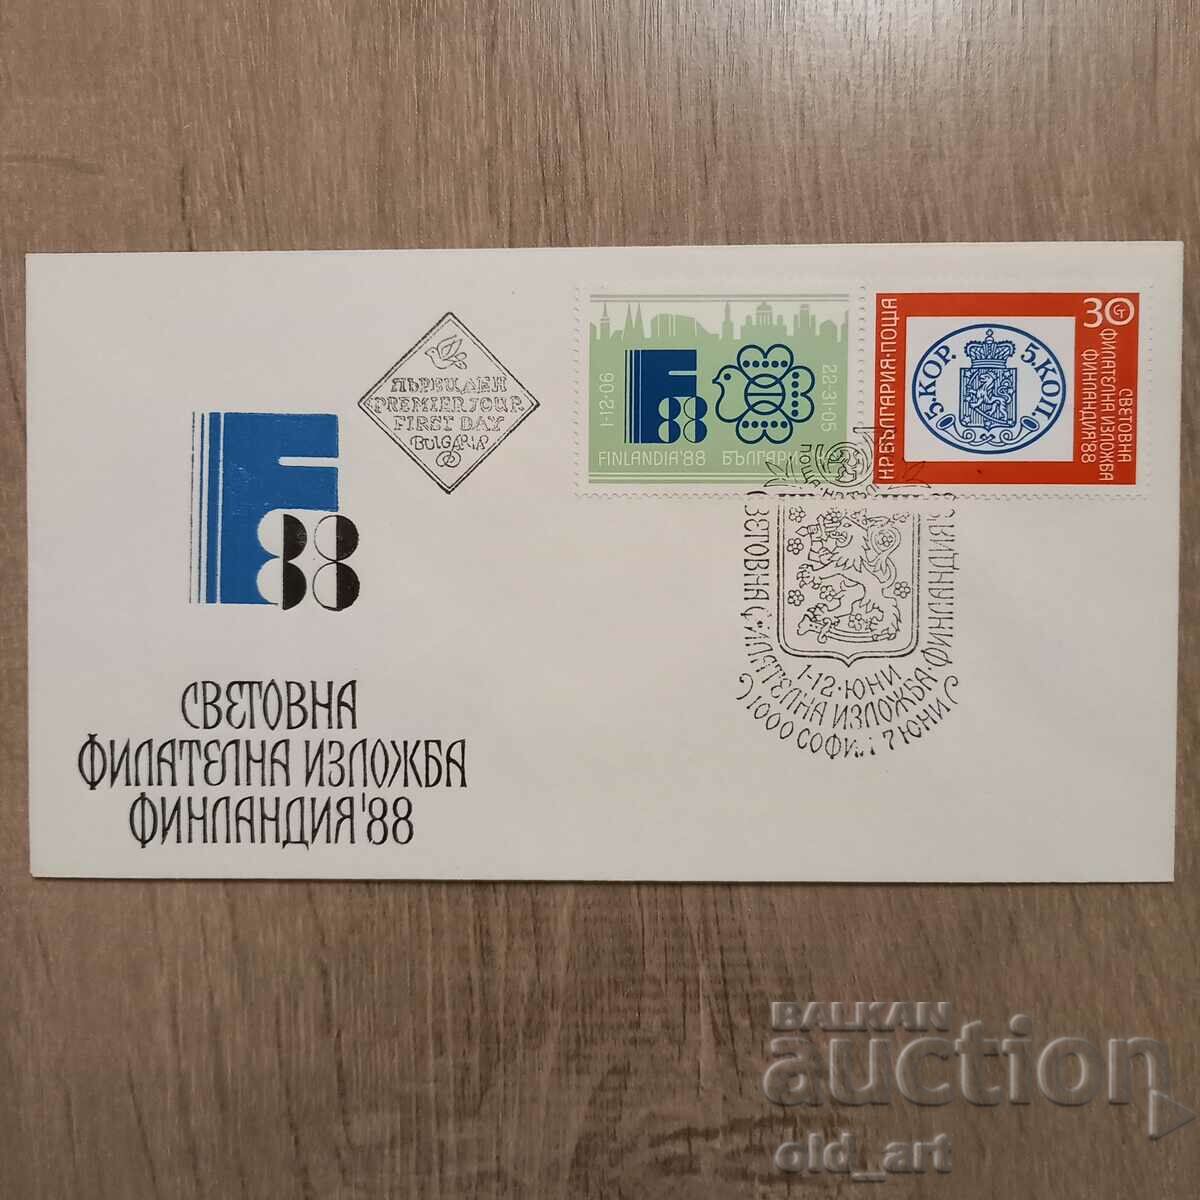 Postal envelope - St. Phil. exhibition Finland 88